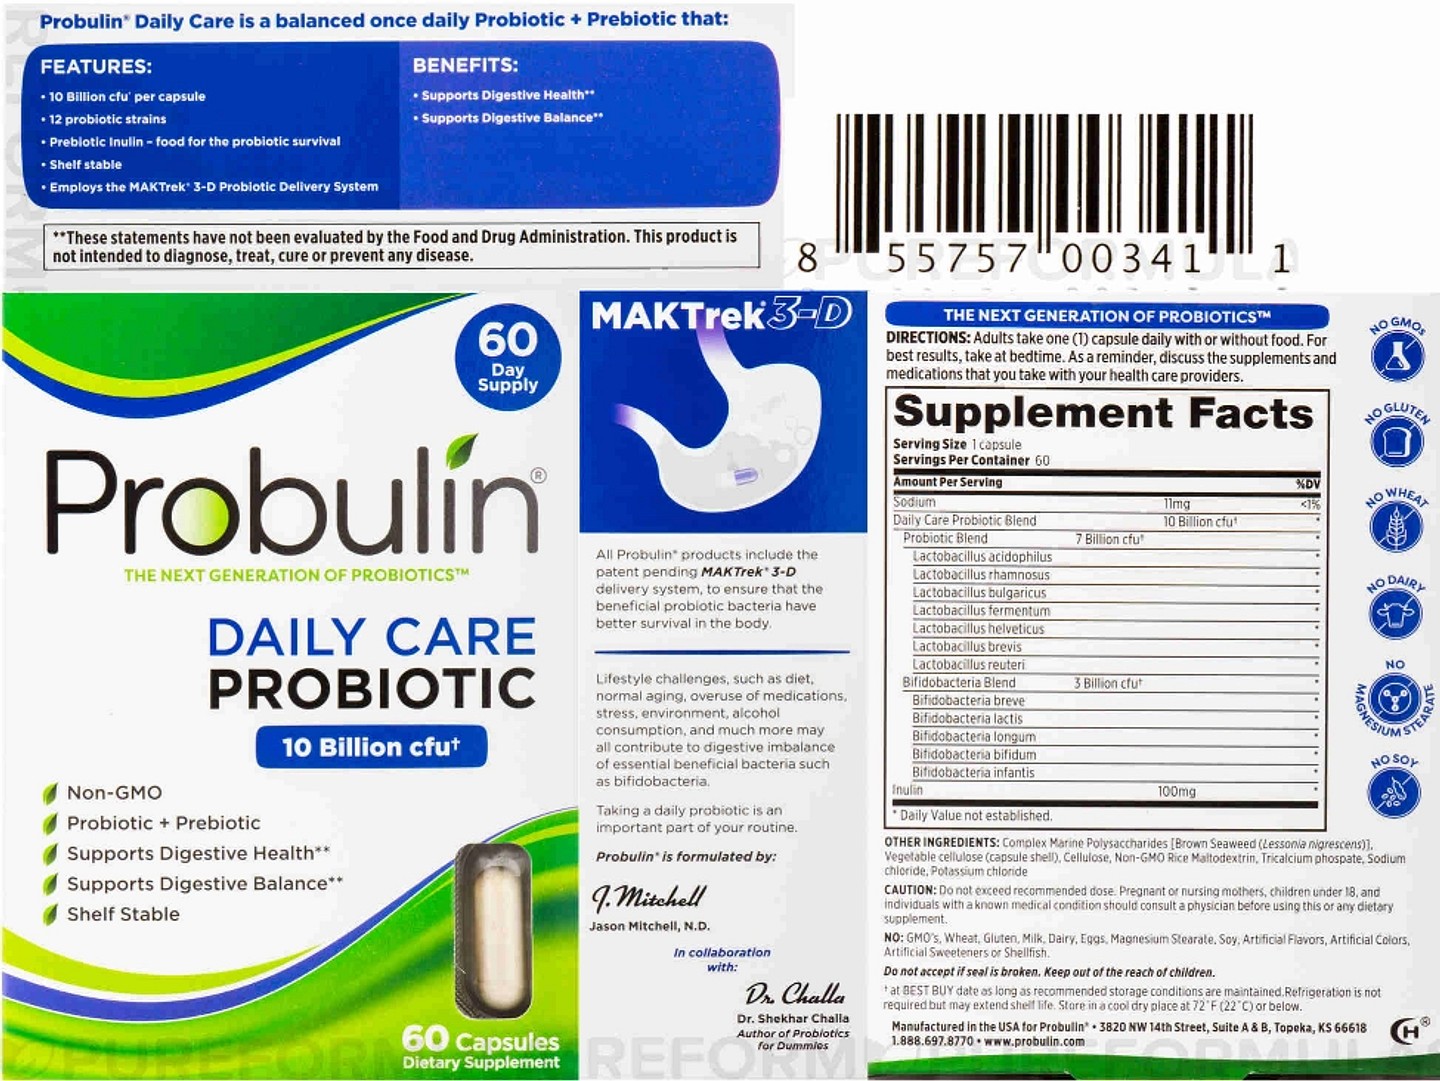 Probulin, Daily Care Probiotic label